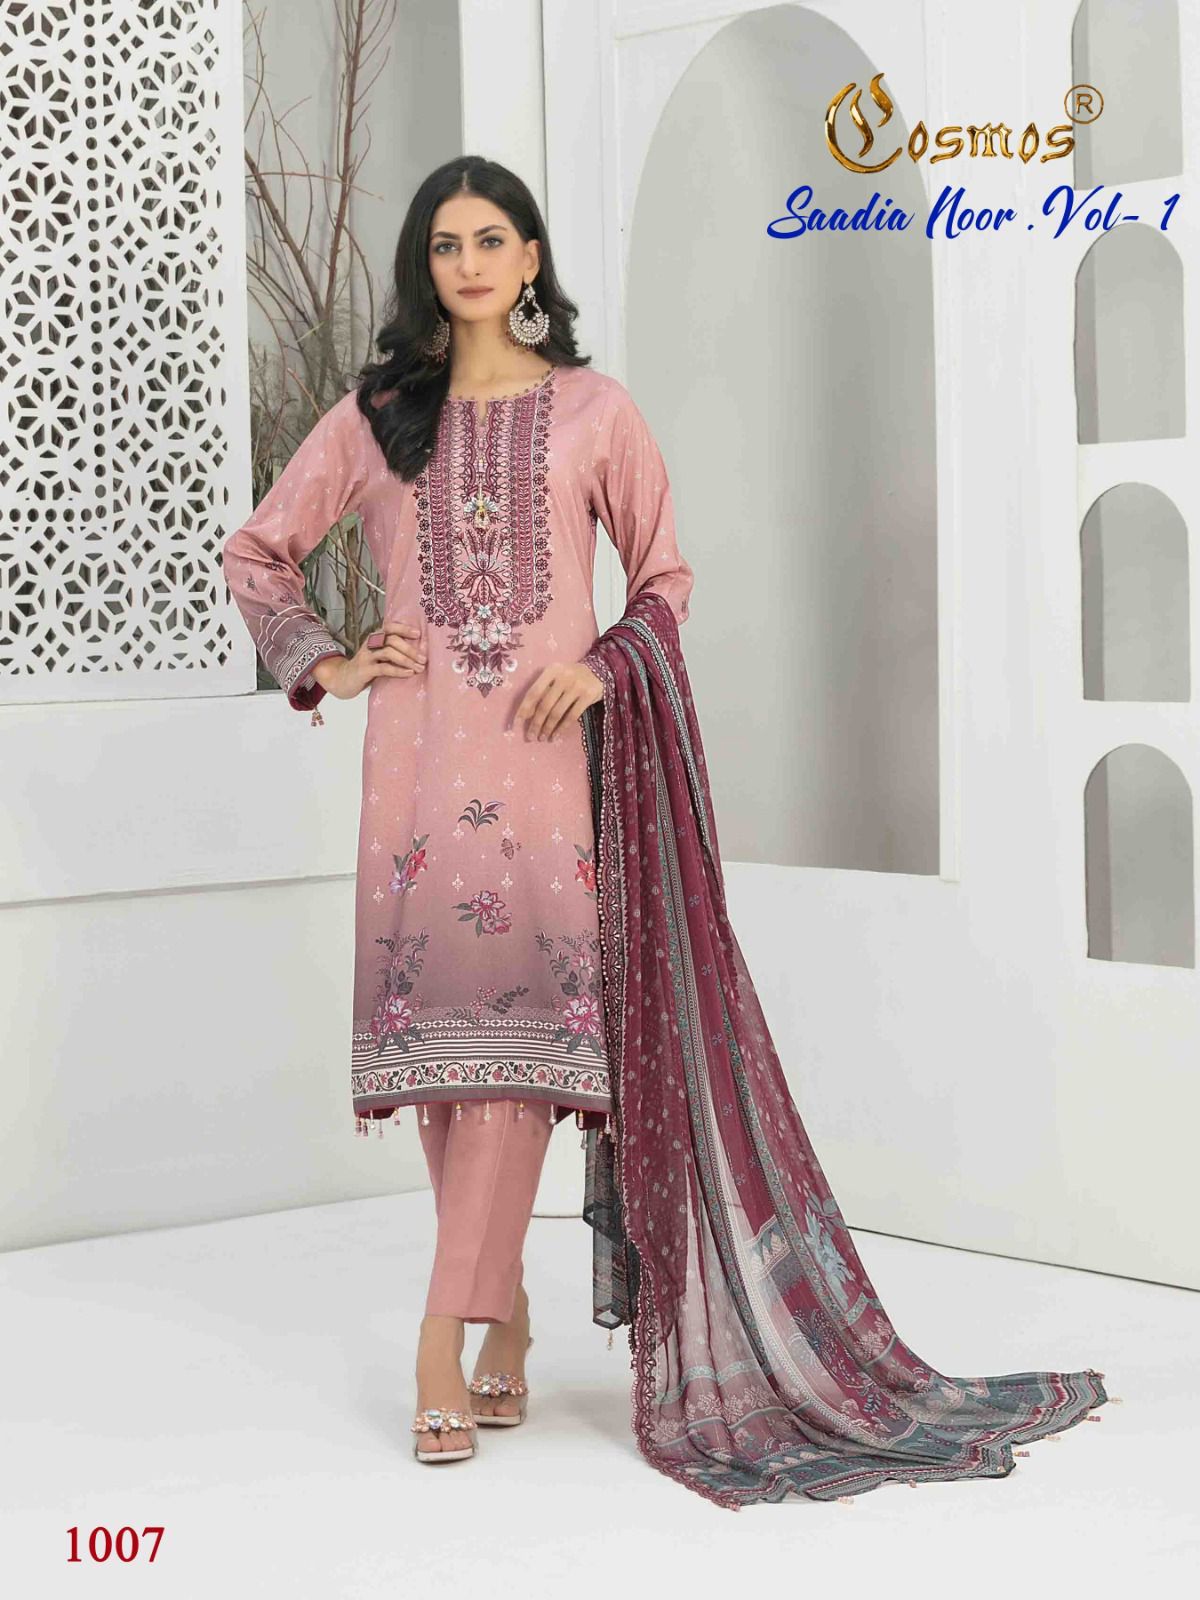 Saadia Noor Vol 1 Cosmos Fashion Pakistani Salwar Suits Manufacturer Wholesaler